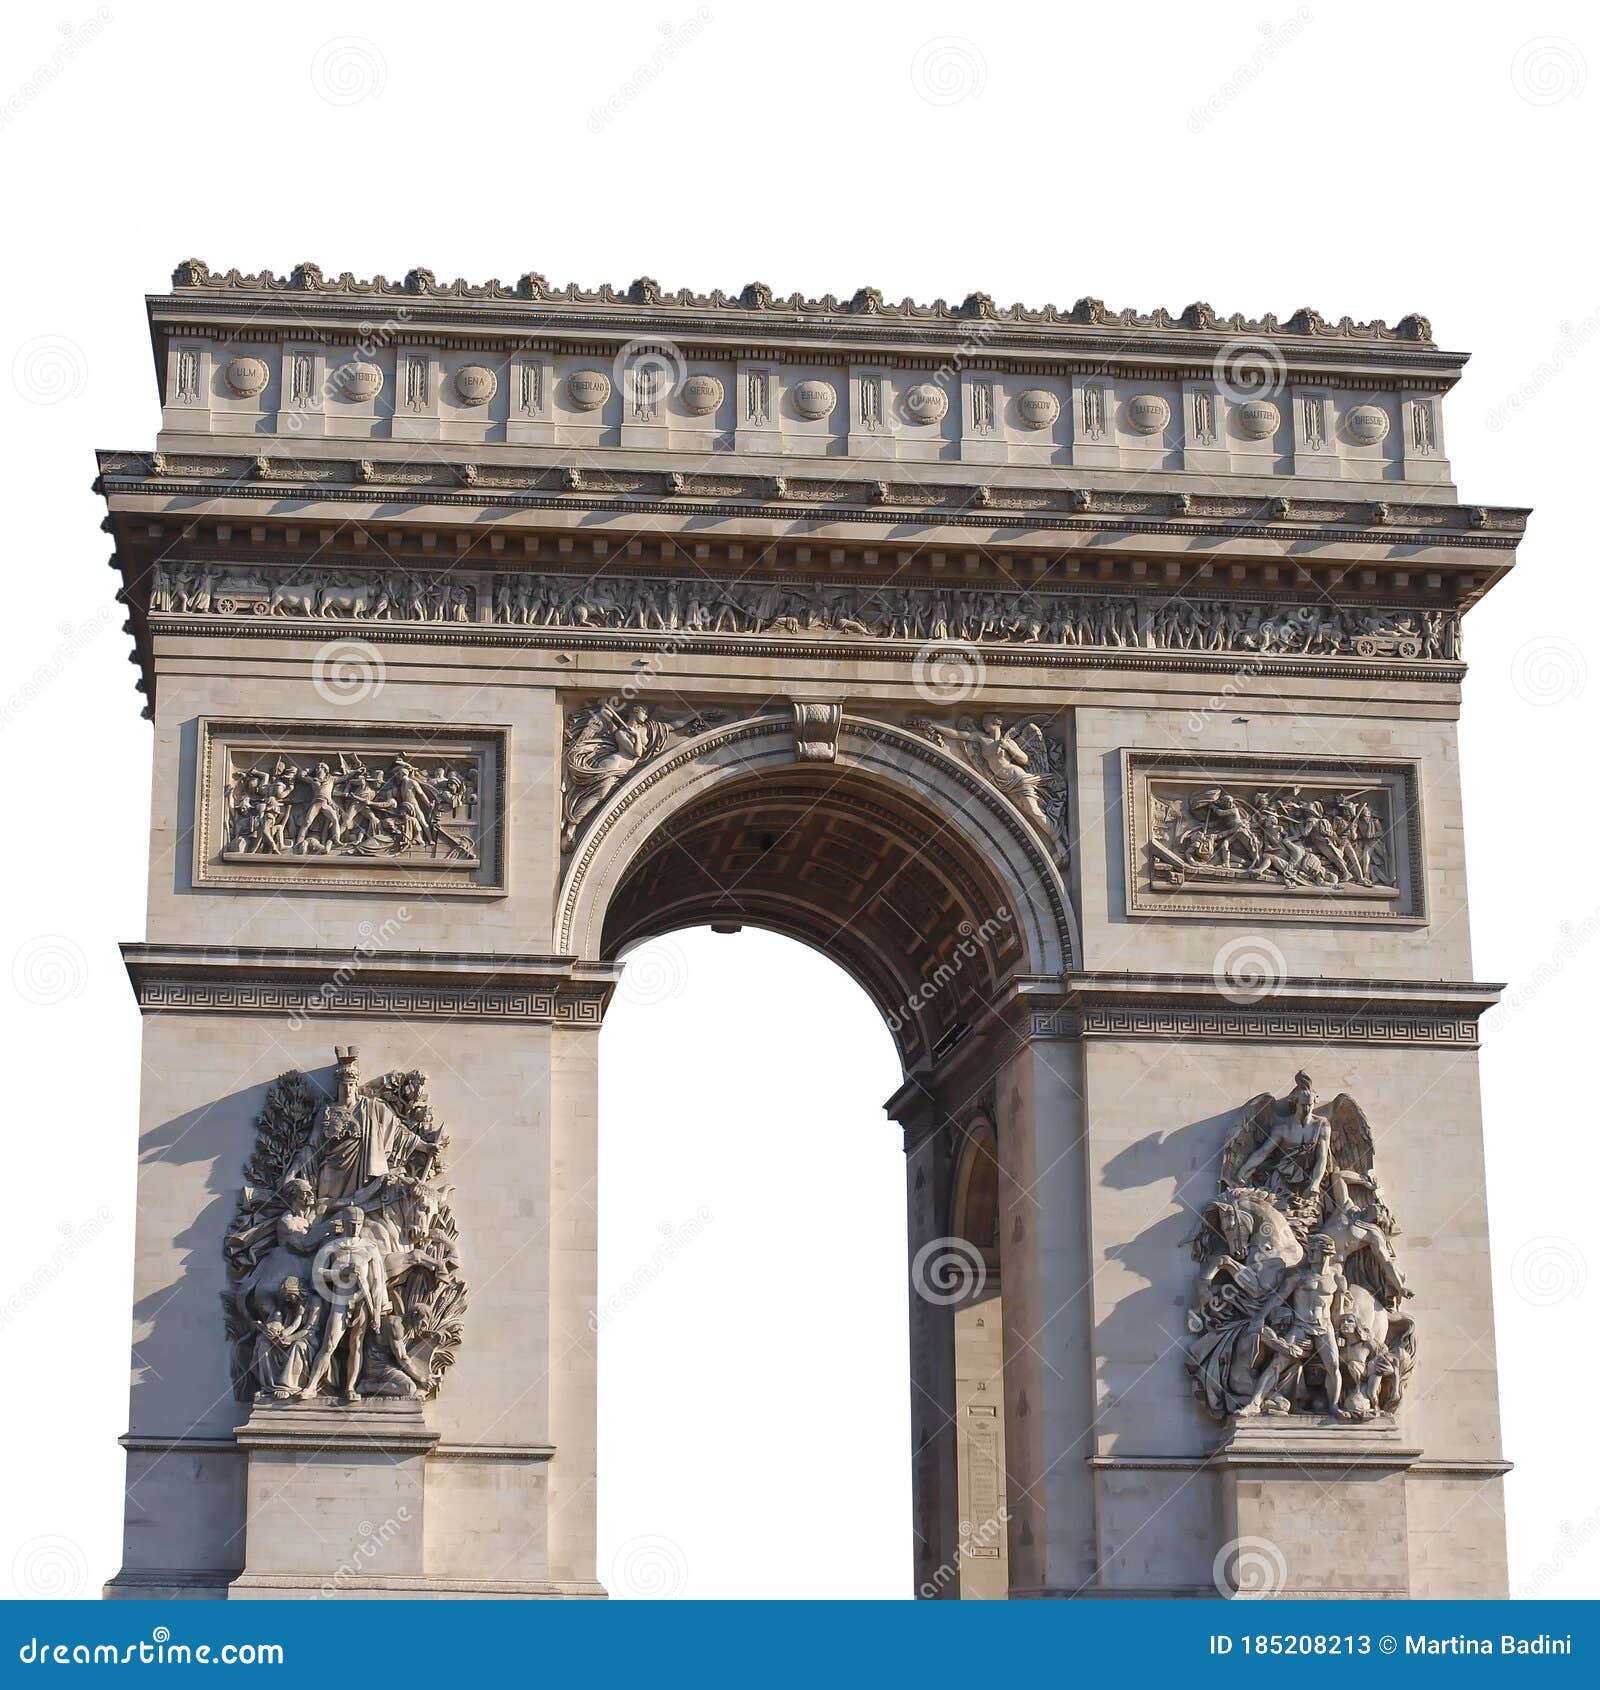 the arc de triomphe de l`etoile  on white background. it is one of the most famous monuments in paris, france